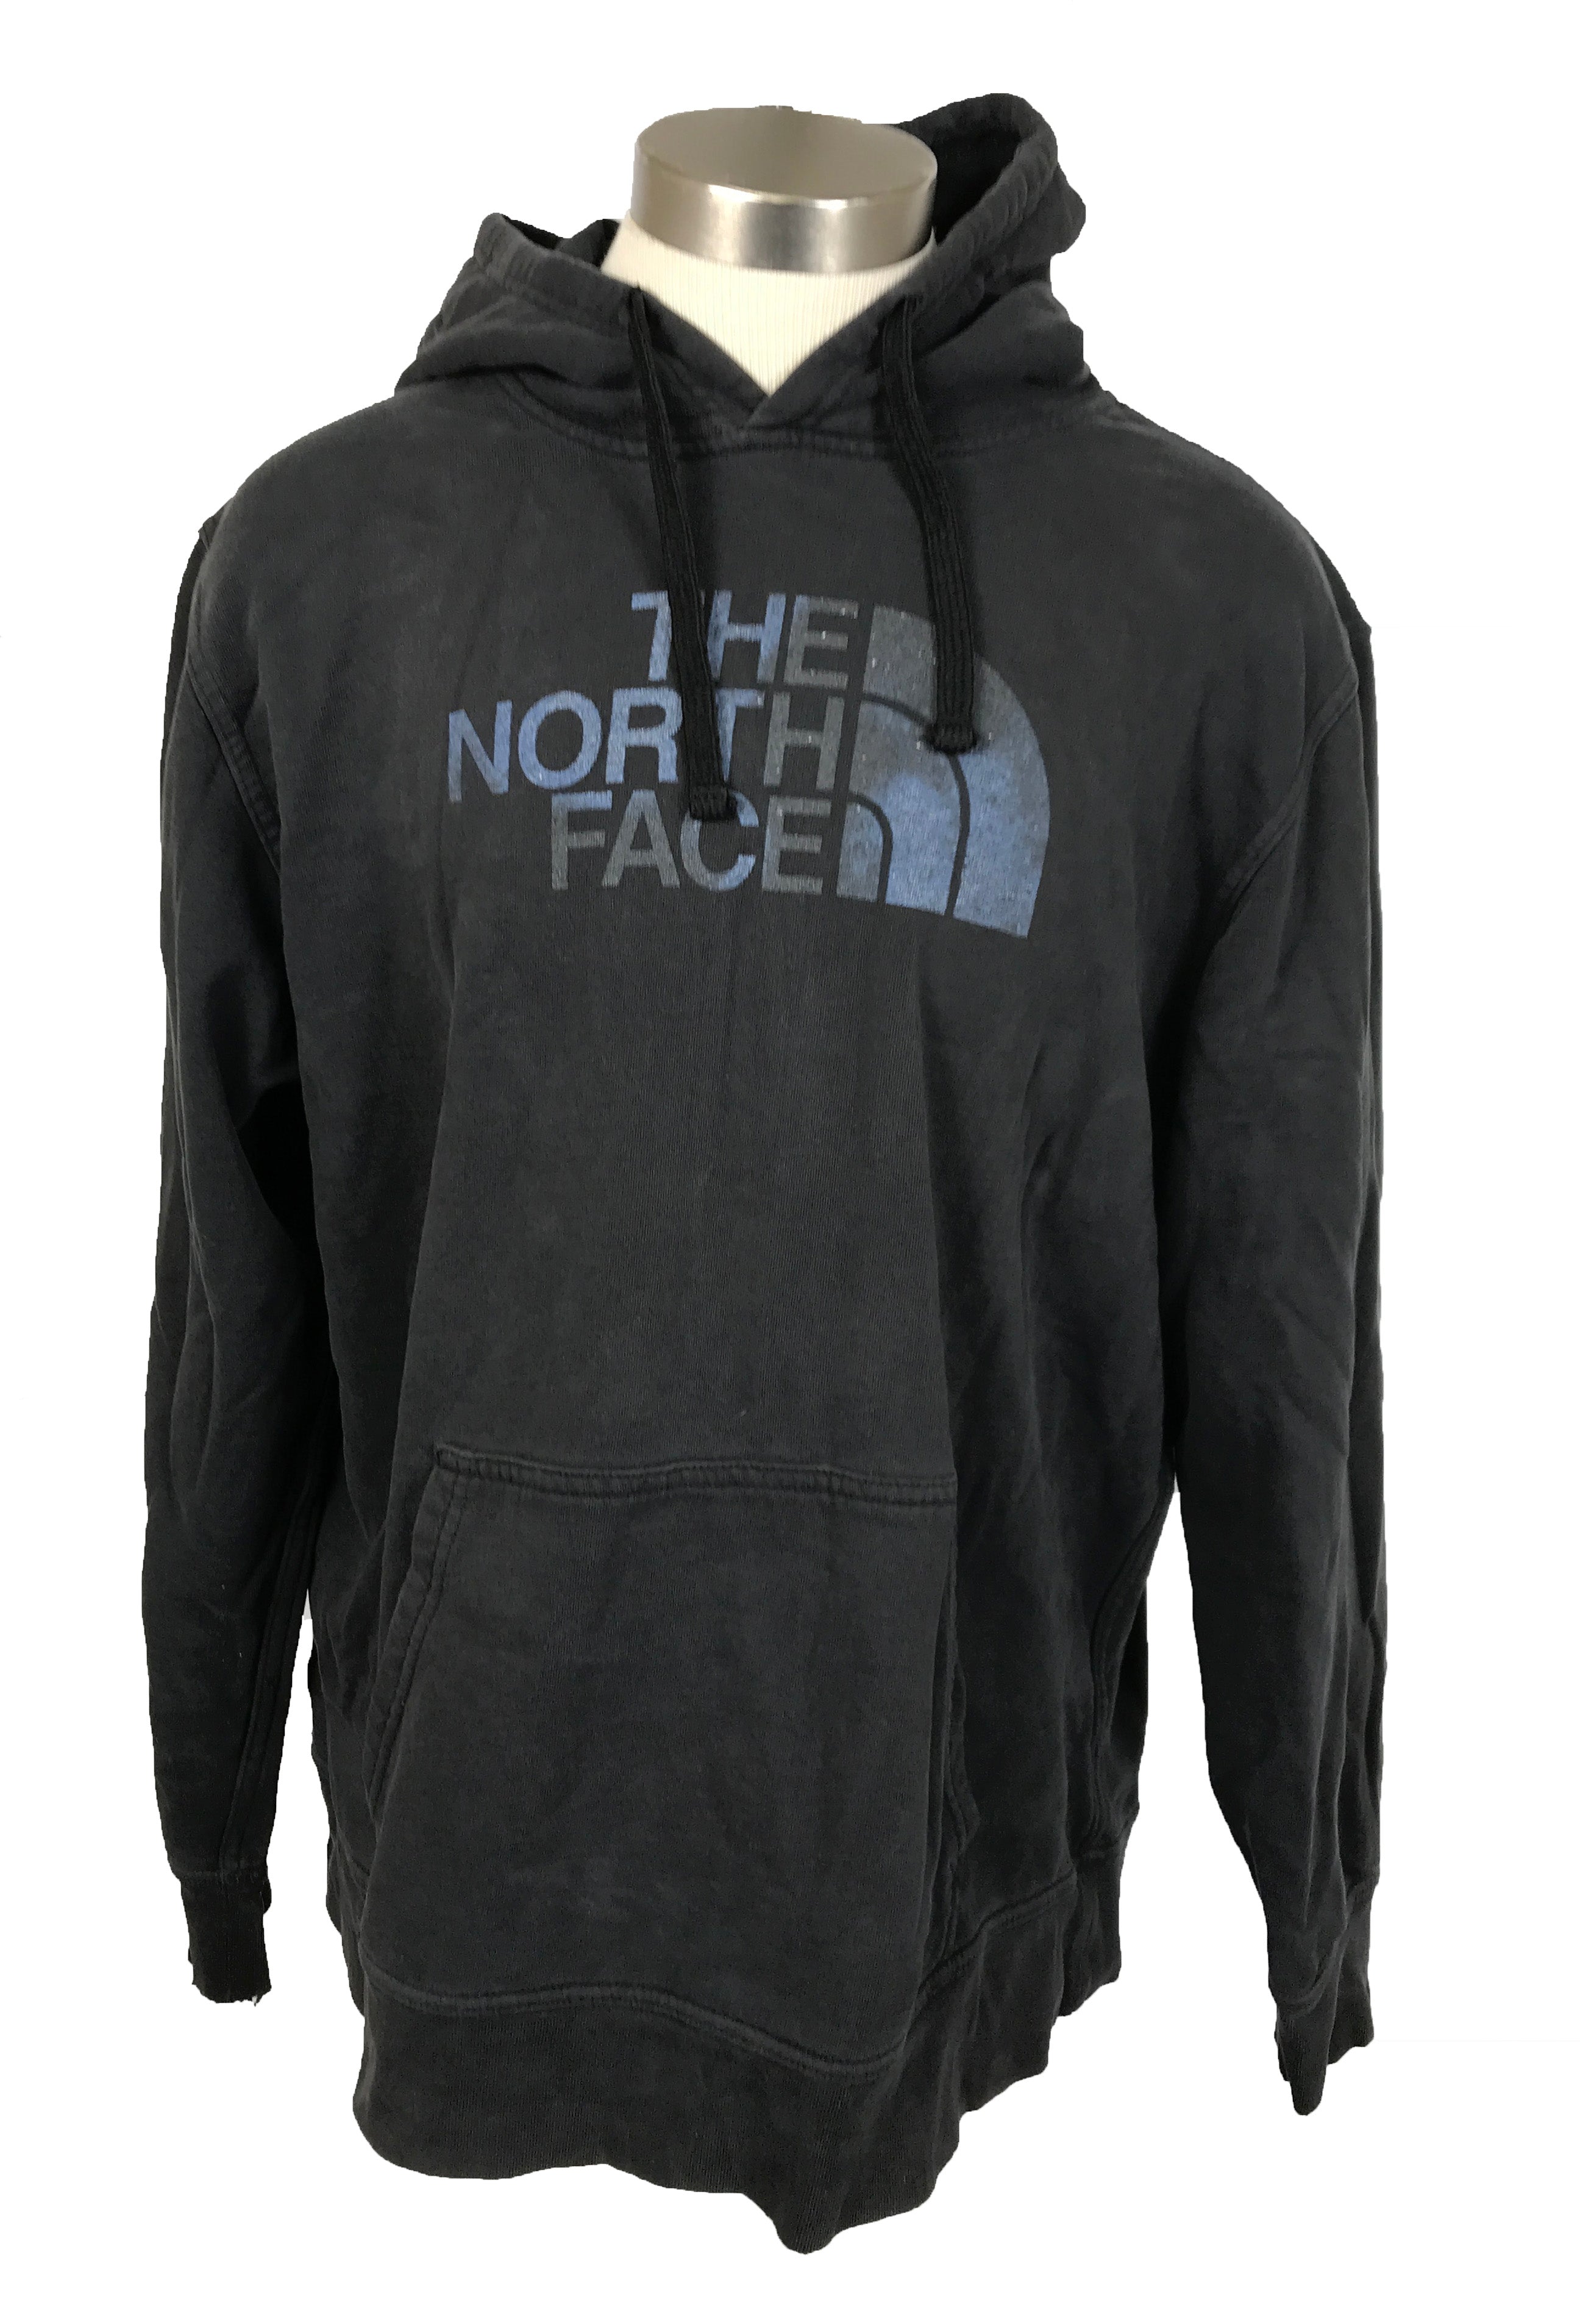 The North Face Space Sweatshirt Men's Size XL